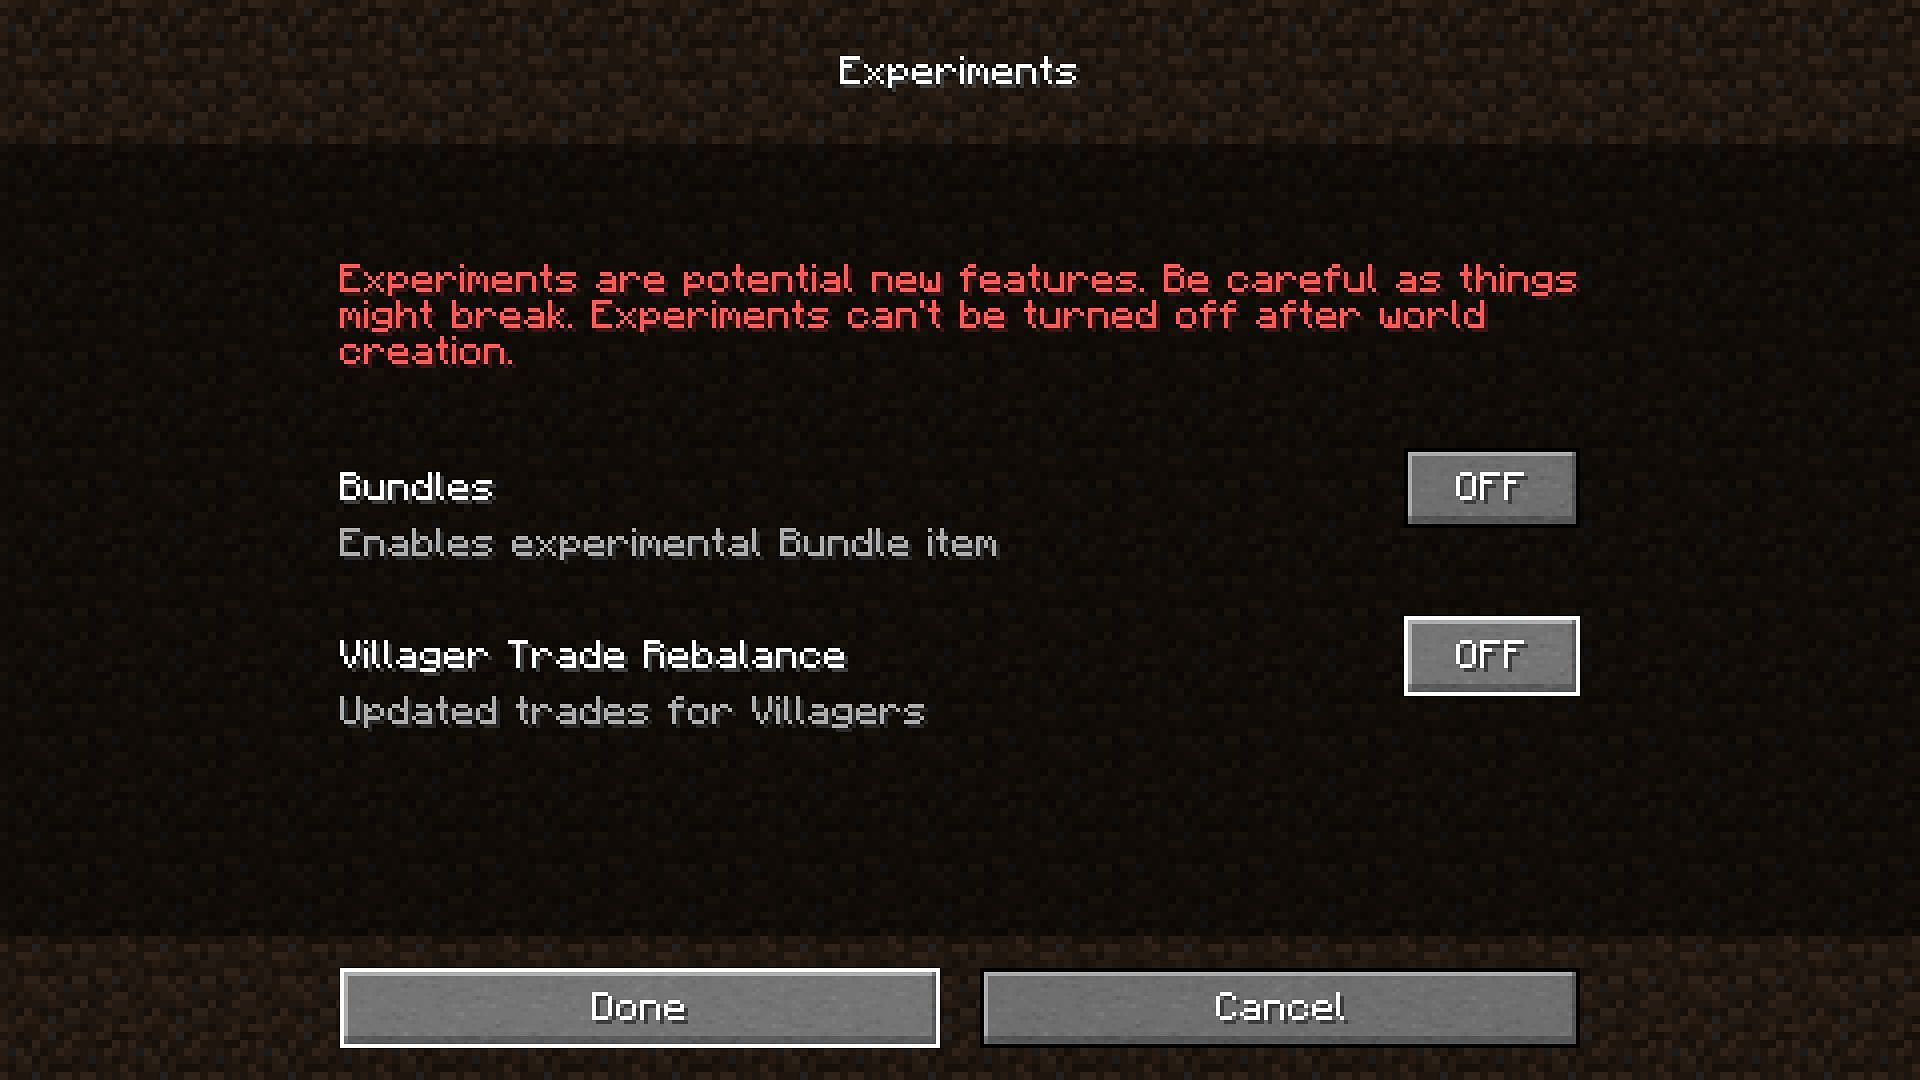 New villager trade rebalance experimental feature (Image via Mojang)